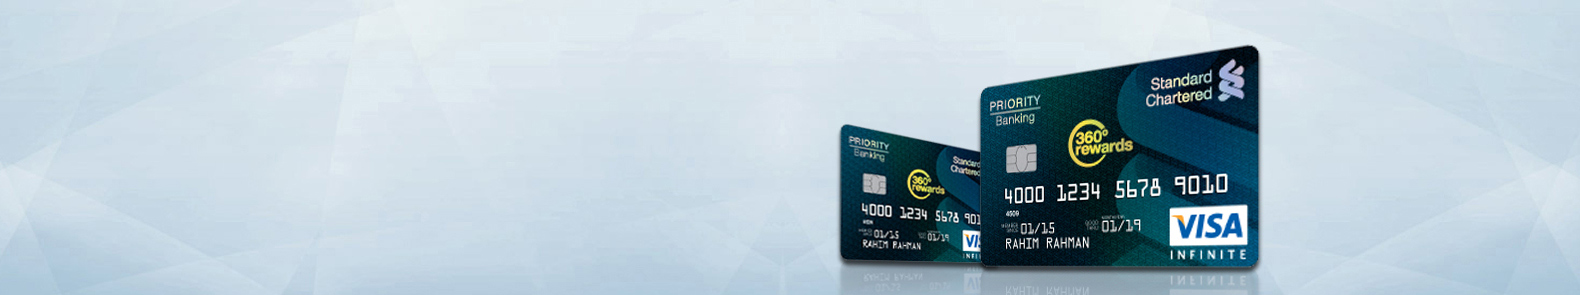 Standard Chartered Credit Cards | Standard Chartered | Brunei